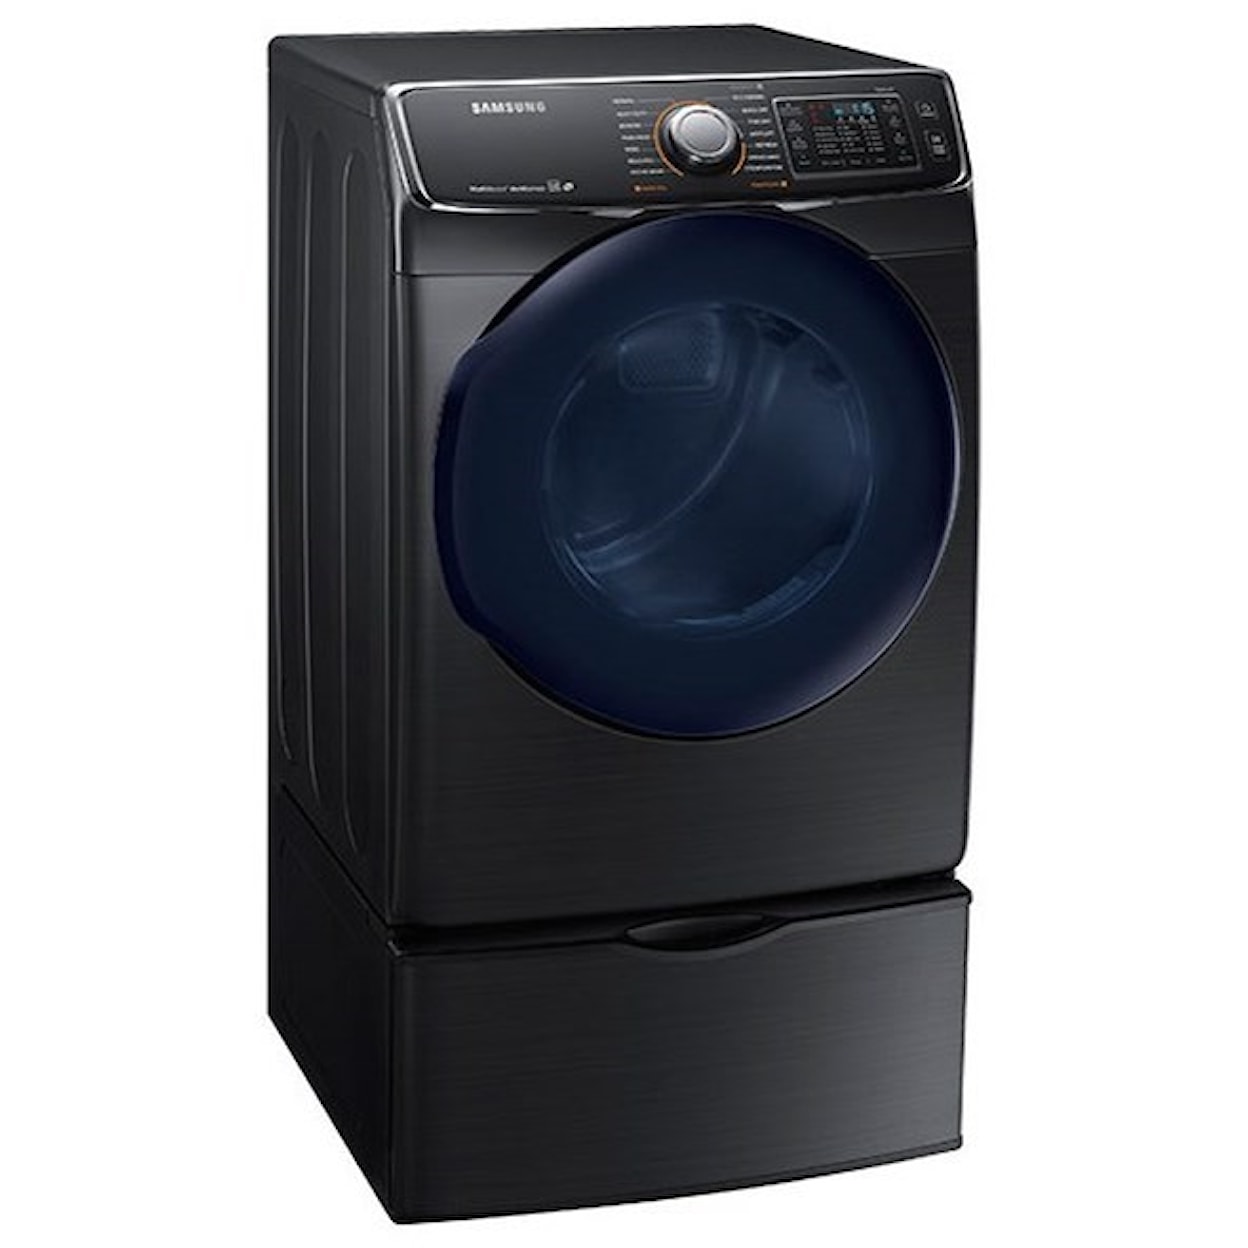 Samsung Appliances Dryers- Samsung DV6500 7.5 cu. ft. Electric Dryer